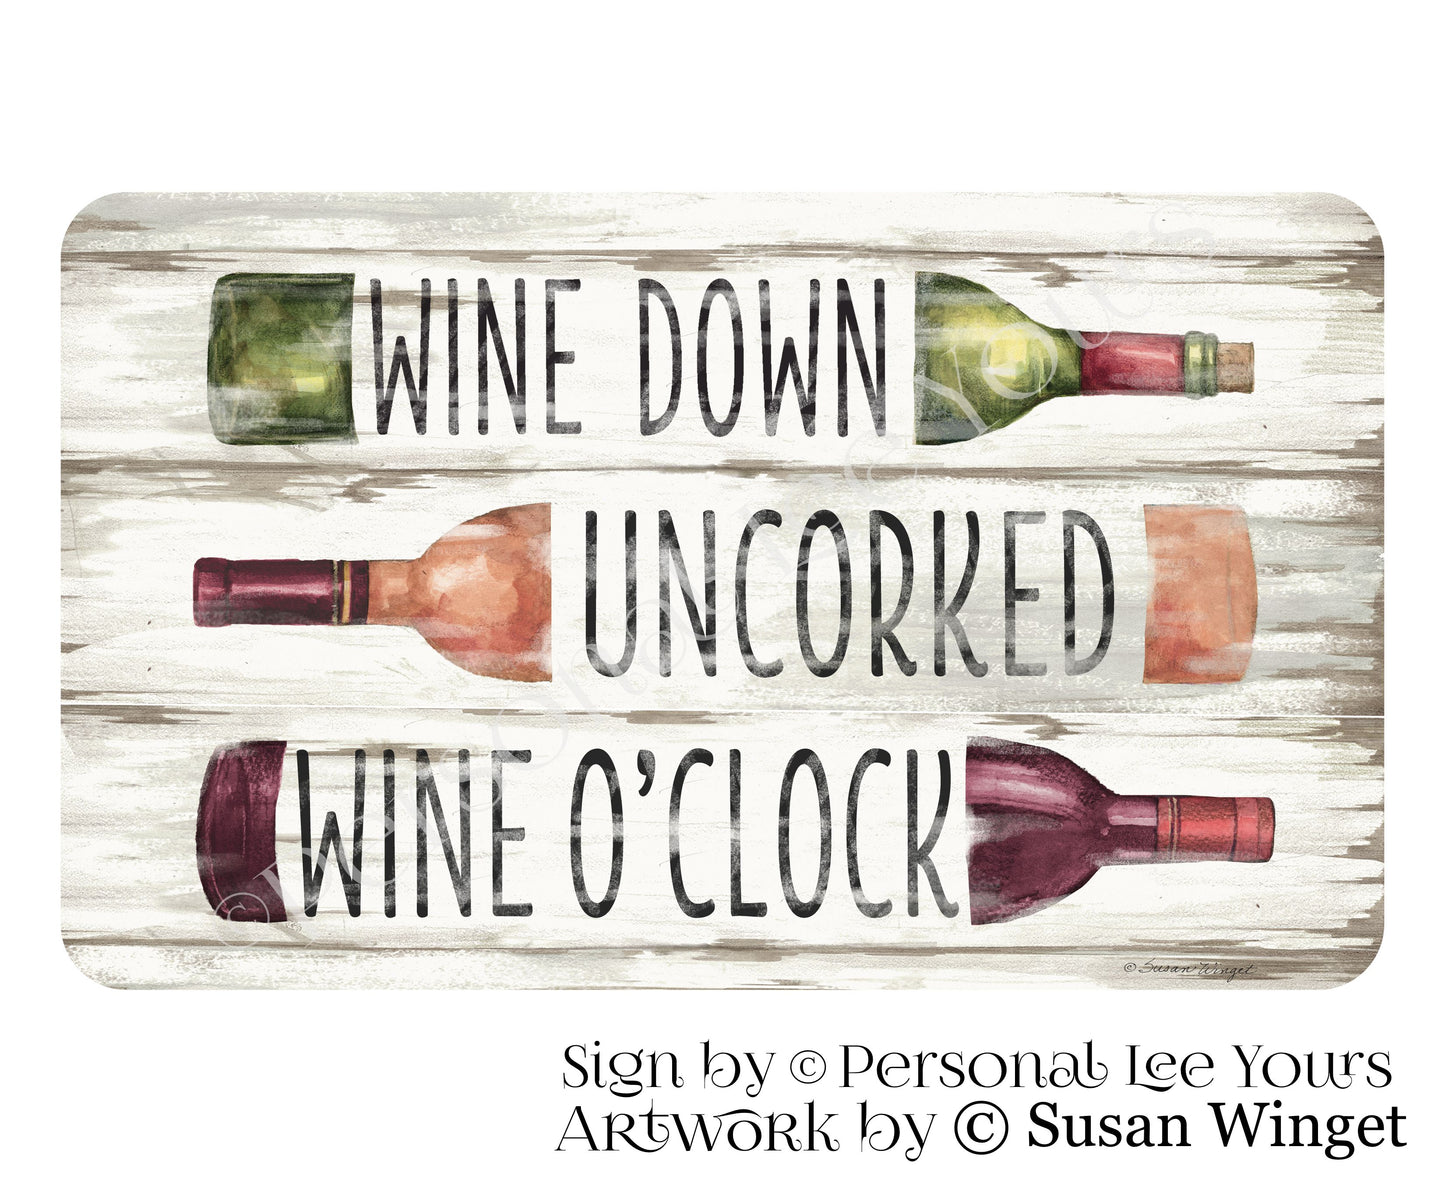 Susan Winget Exclusive Sign * Stacked Bottles * Wine * 4 Sizes * Lightweight Metal